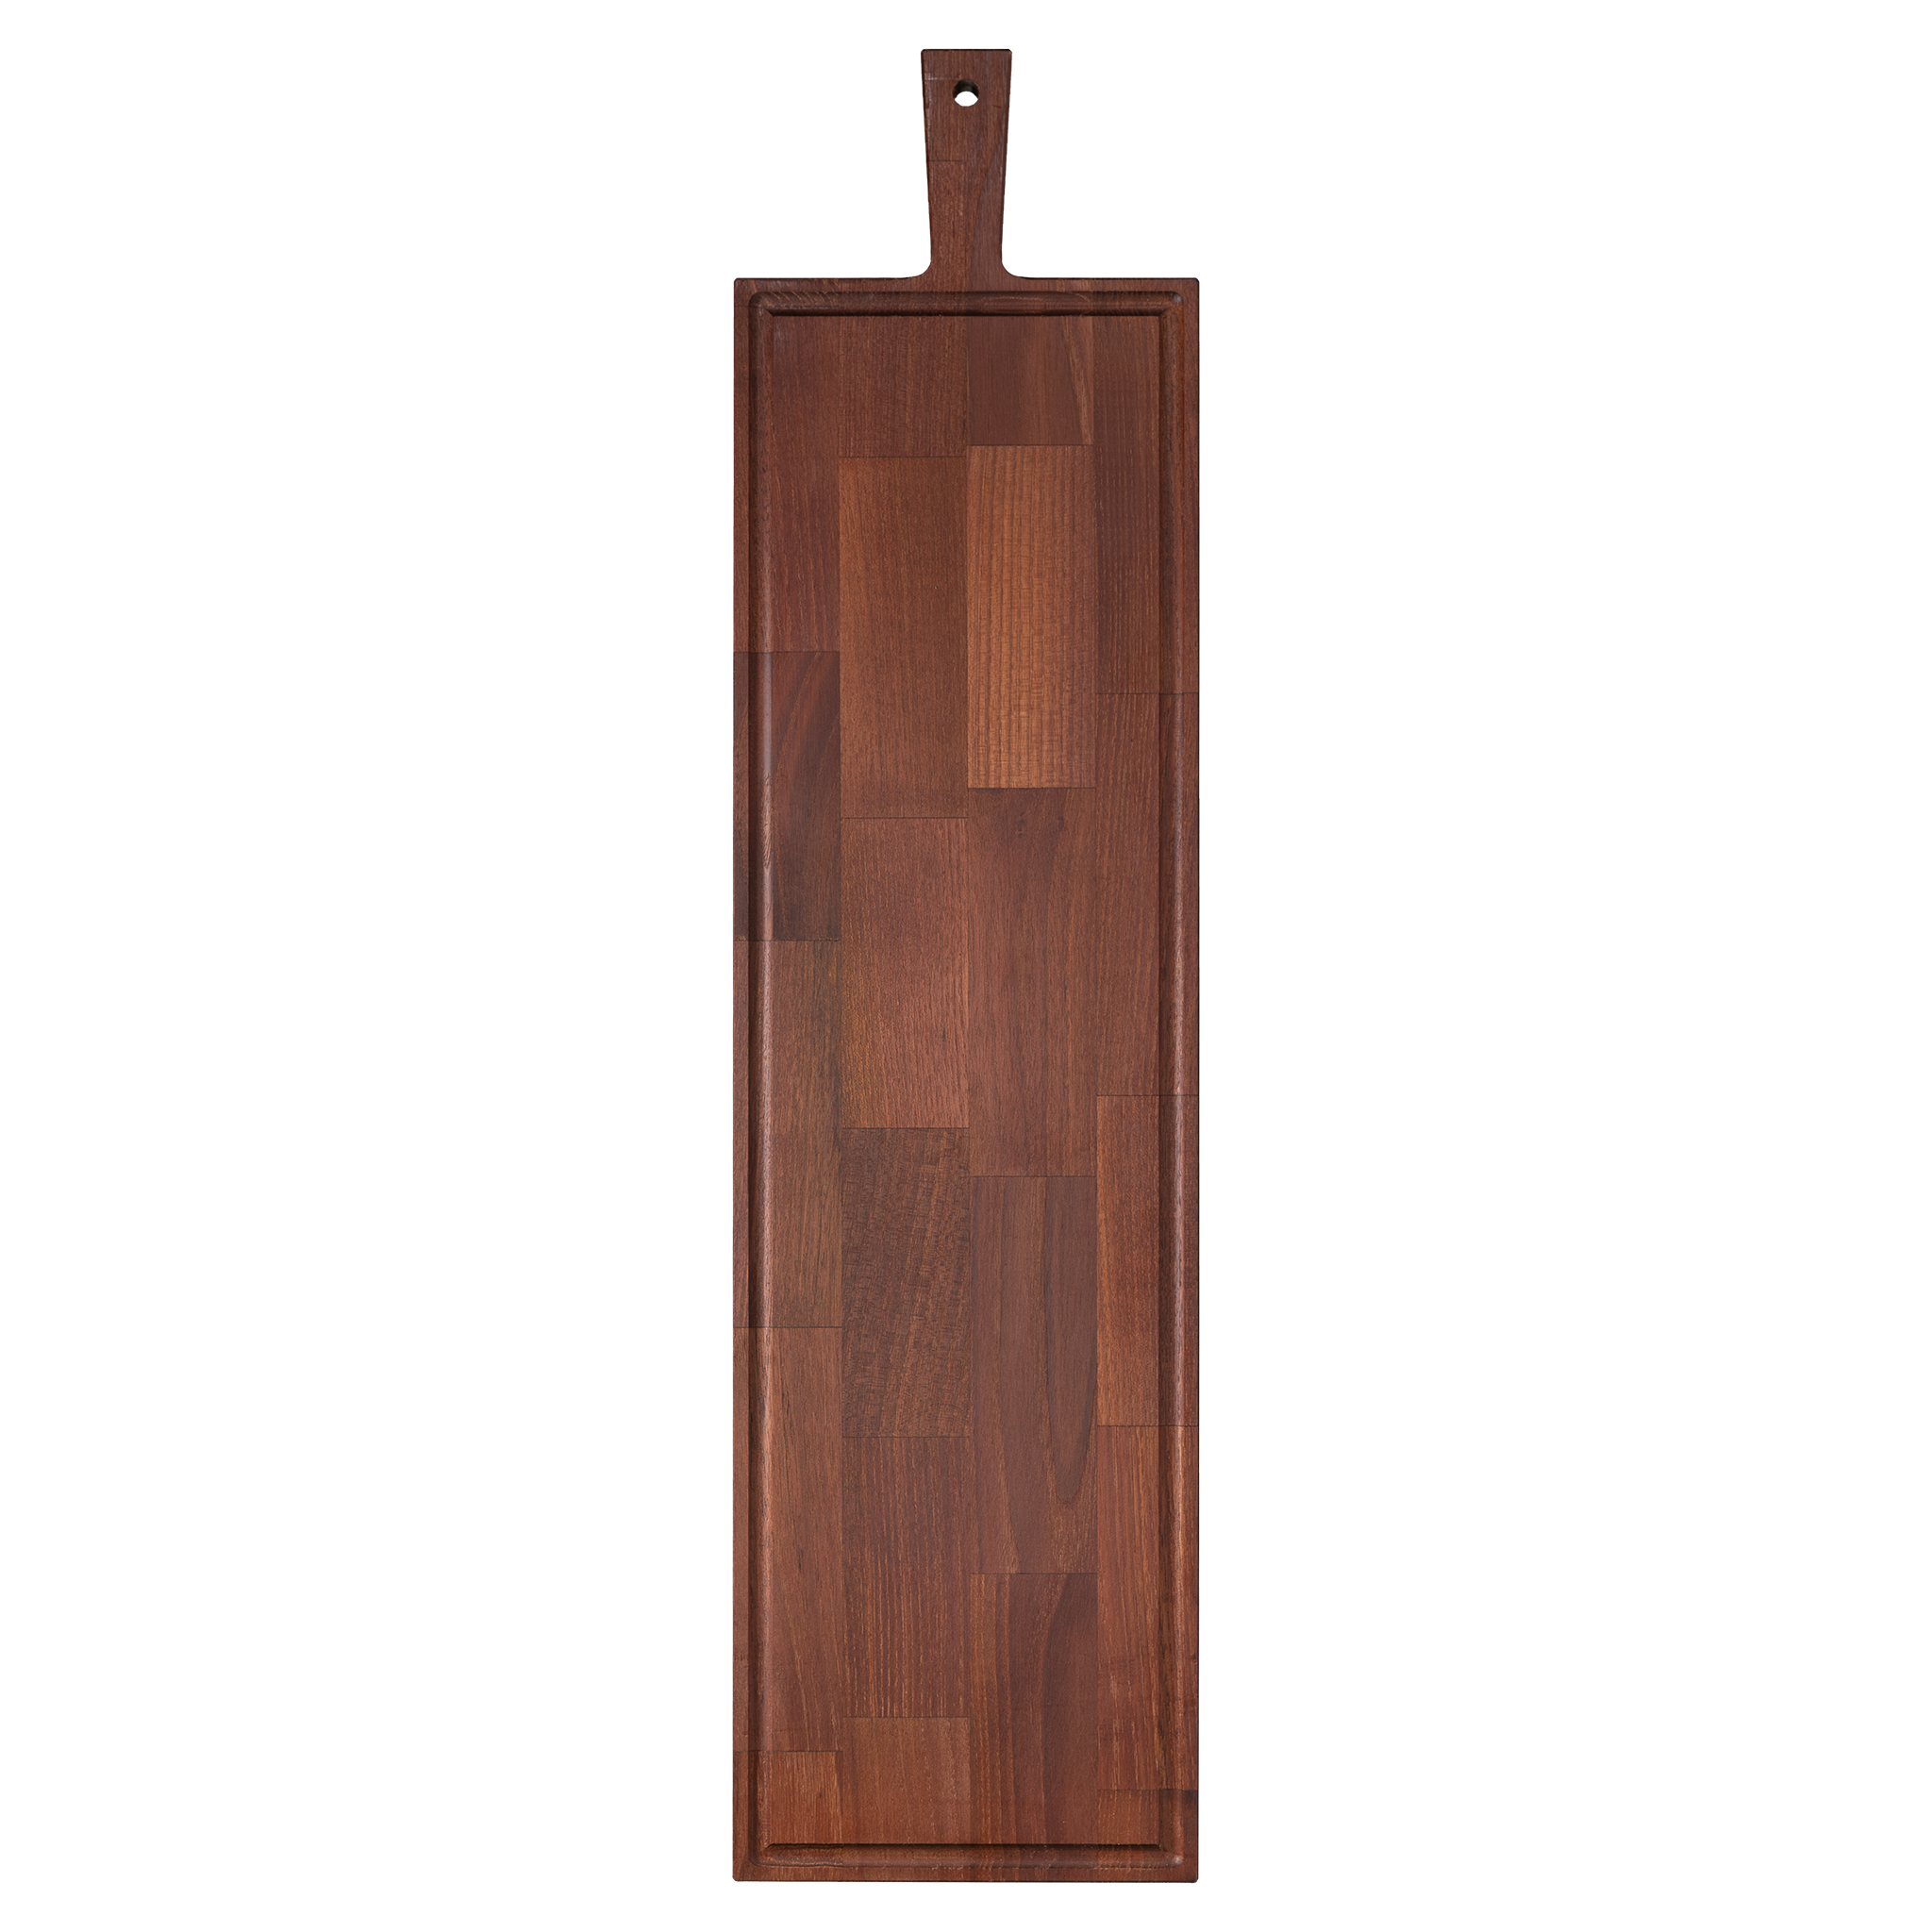 Acacia personalized serving board (80 x 20 cm) - Hedemora